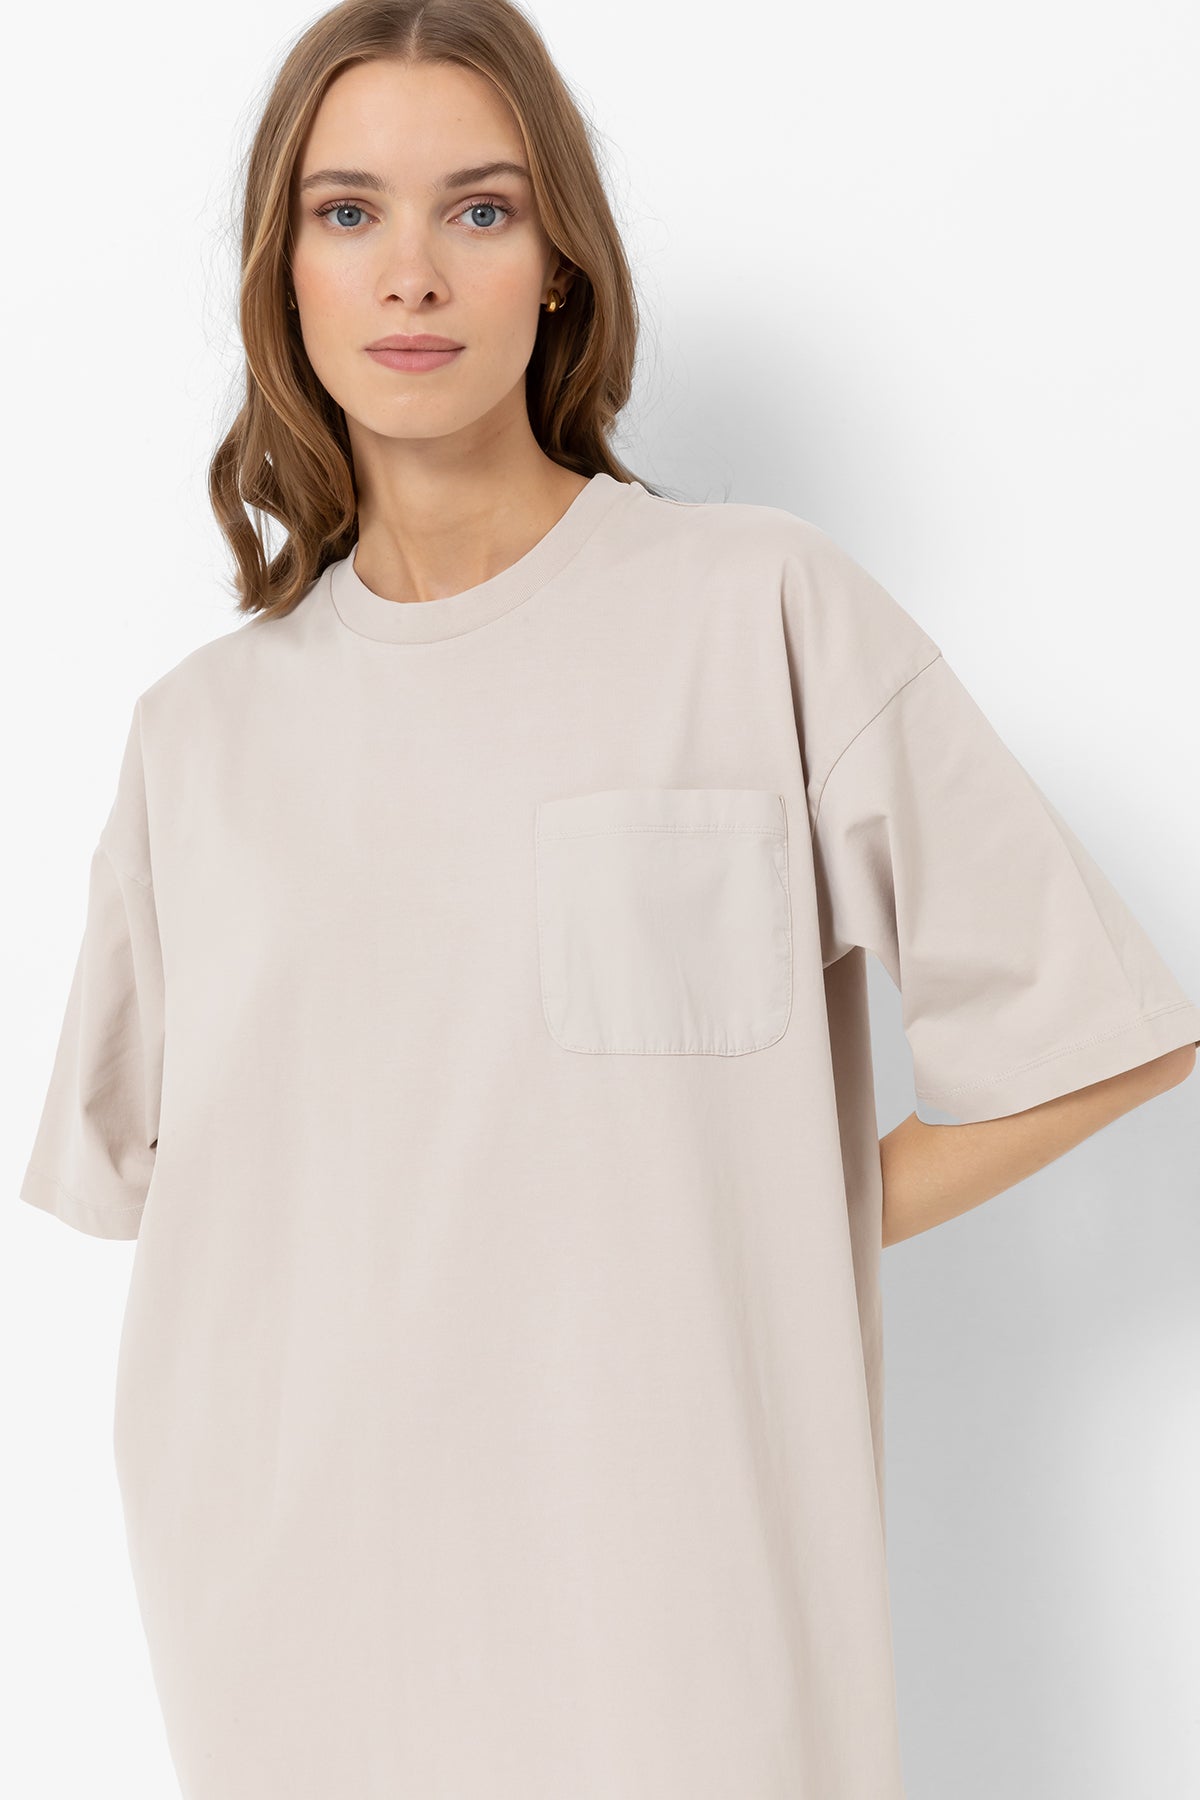 Hysaline T-shirt Dress | Marled Ivory